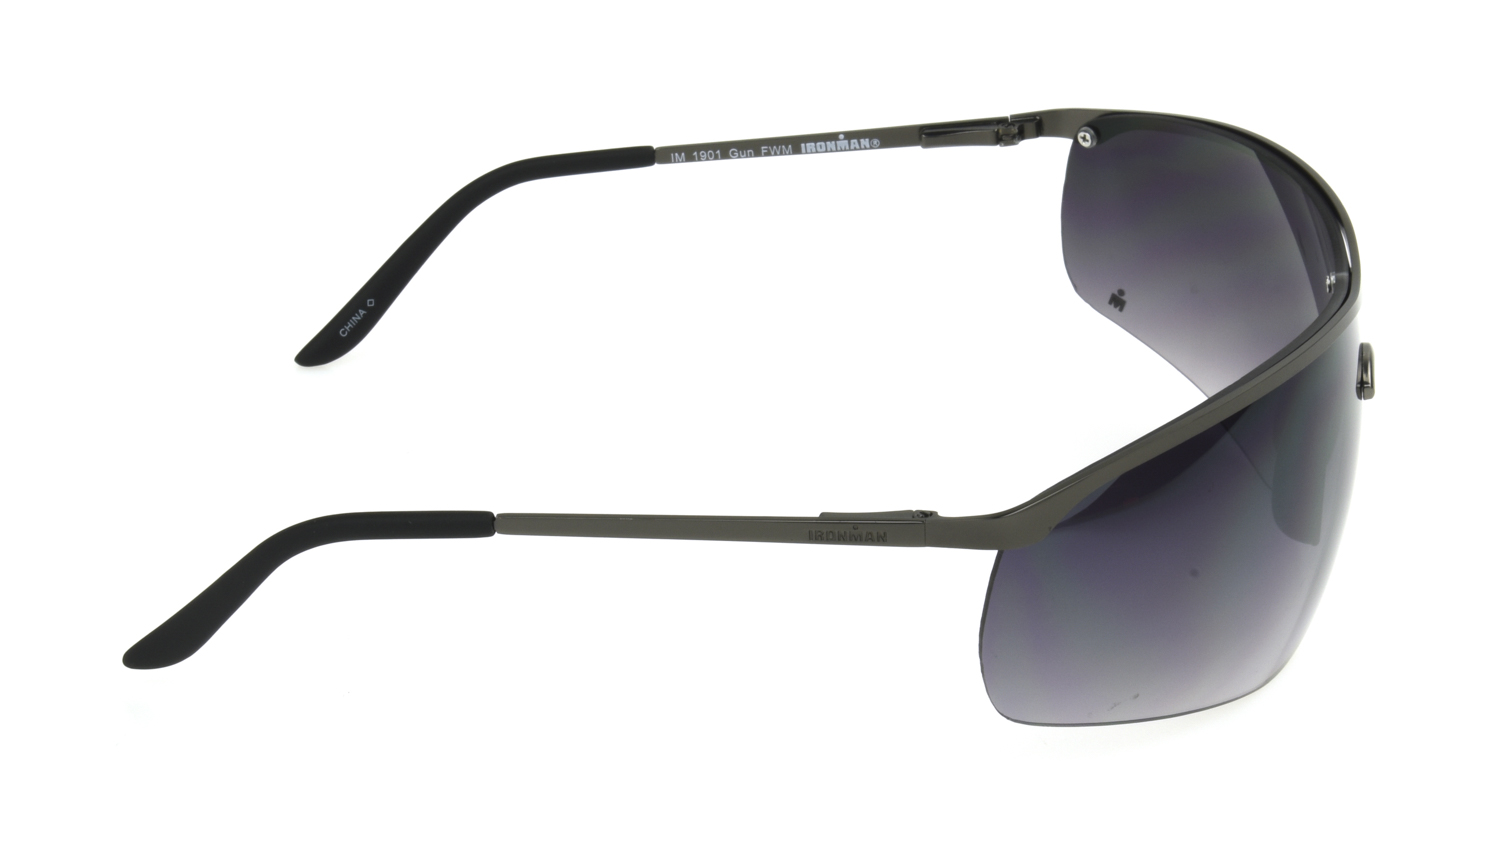 IRONMAN Men's Gunmetal Shield Sunglasses PP02 - image 3 of 3